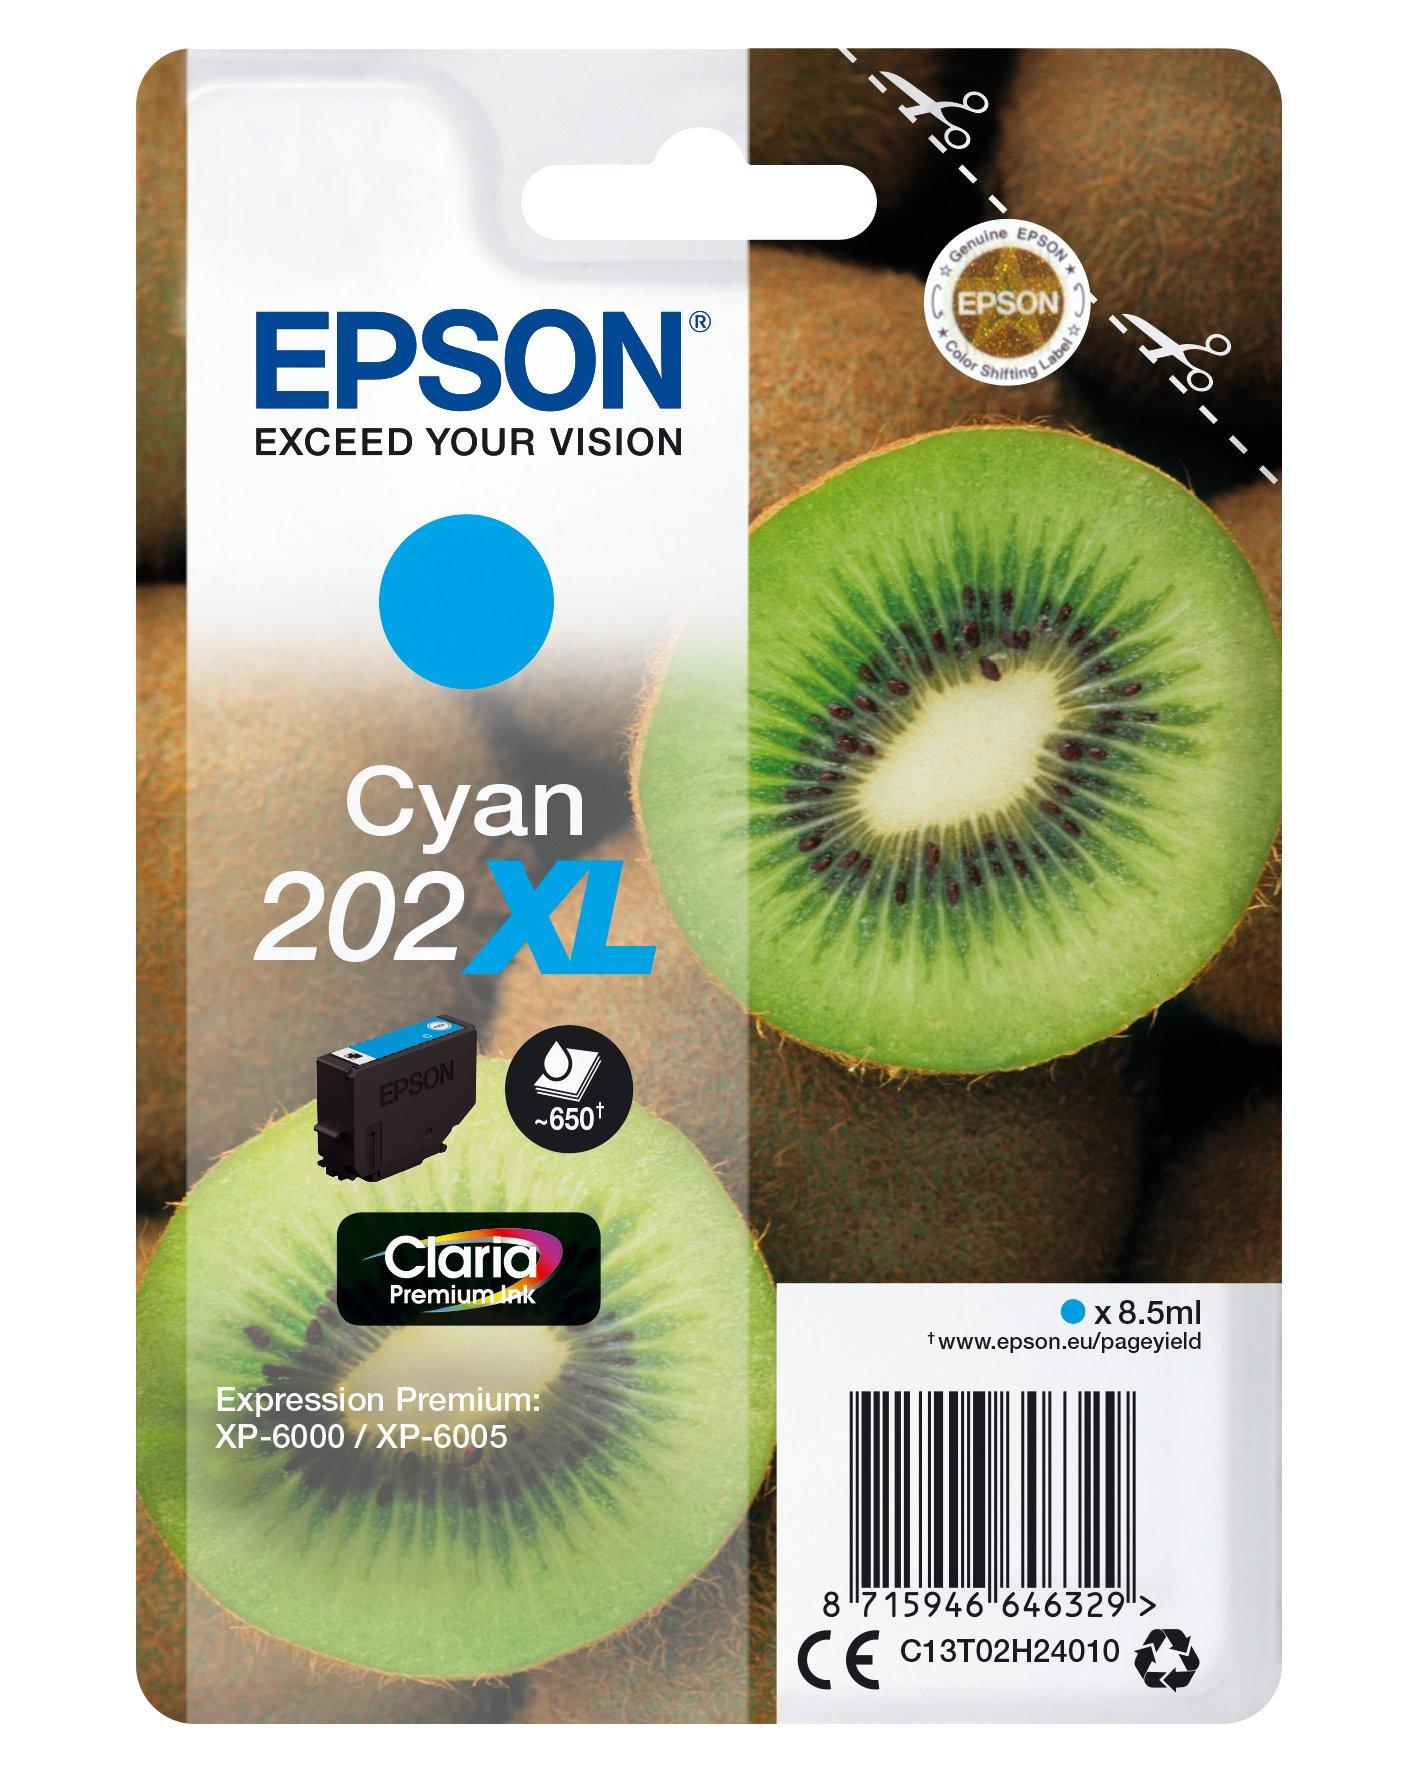 EPSON EXPRESSION PREMIUM XP-6105 Multifunction printer colour